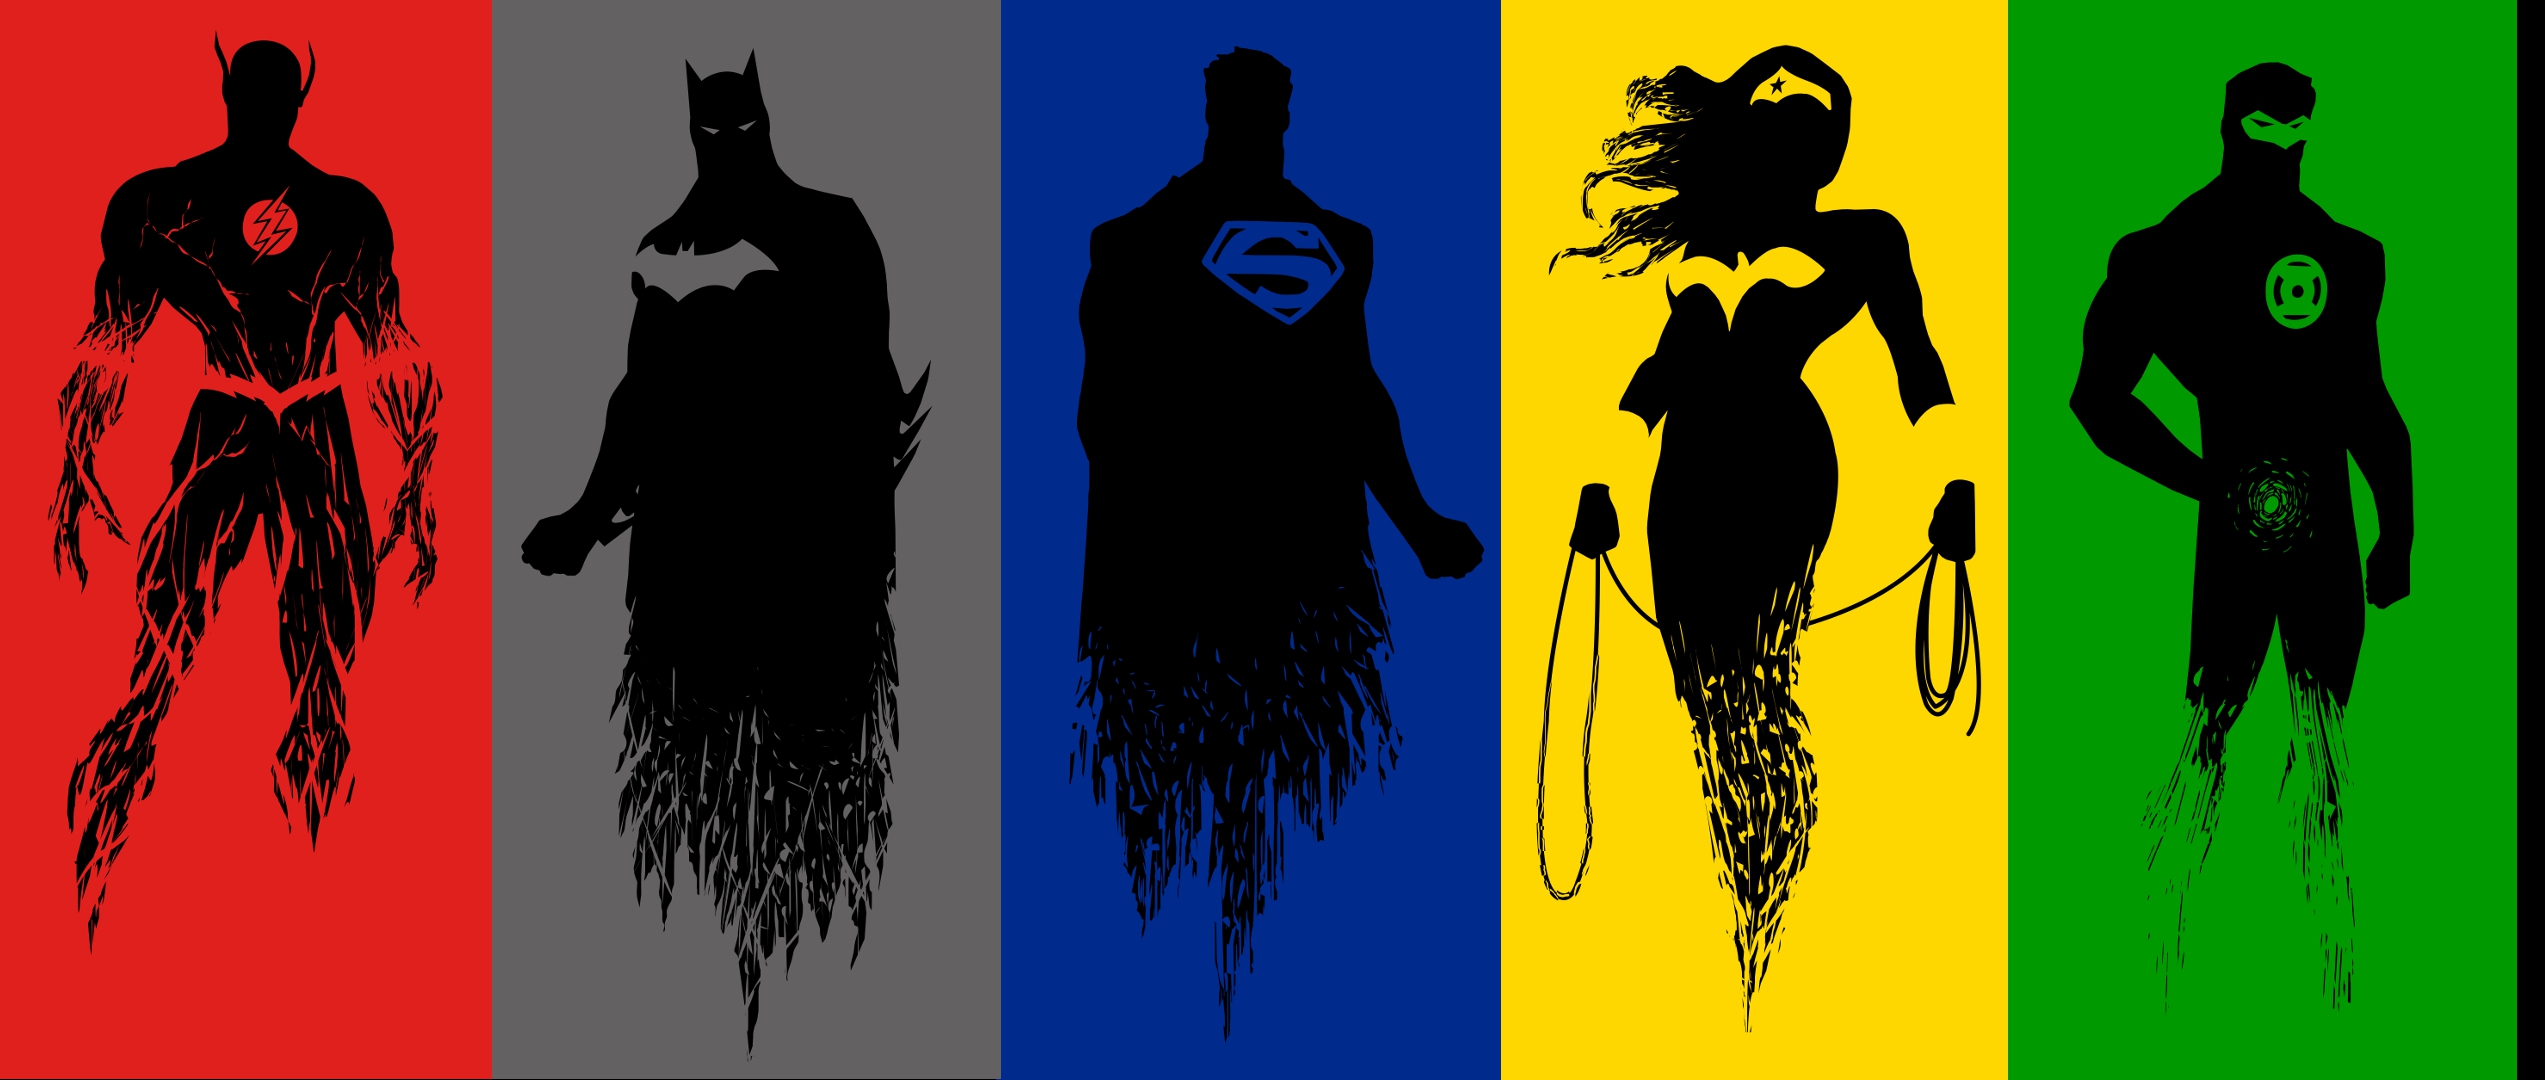 justice league wallpaper